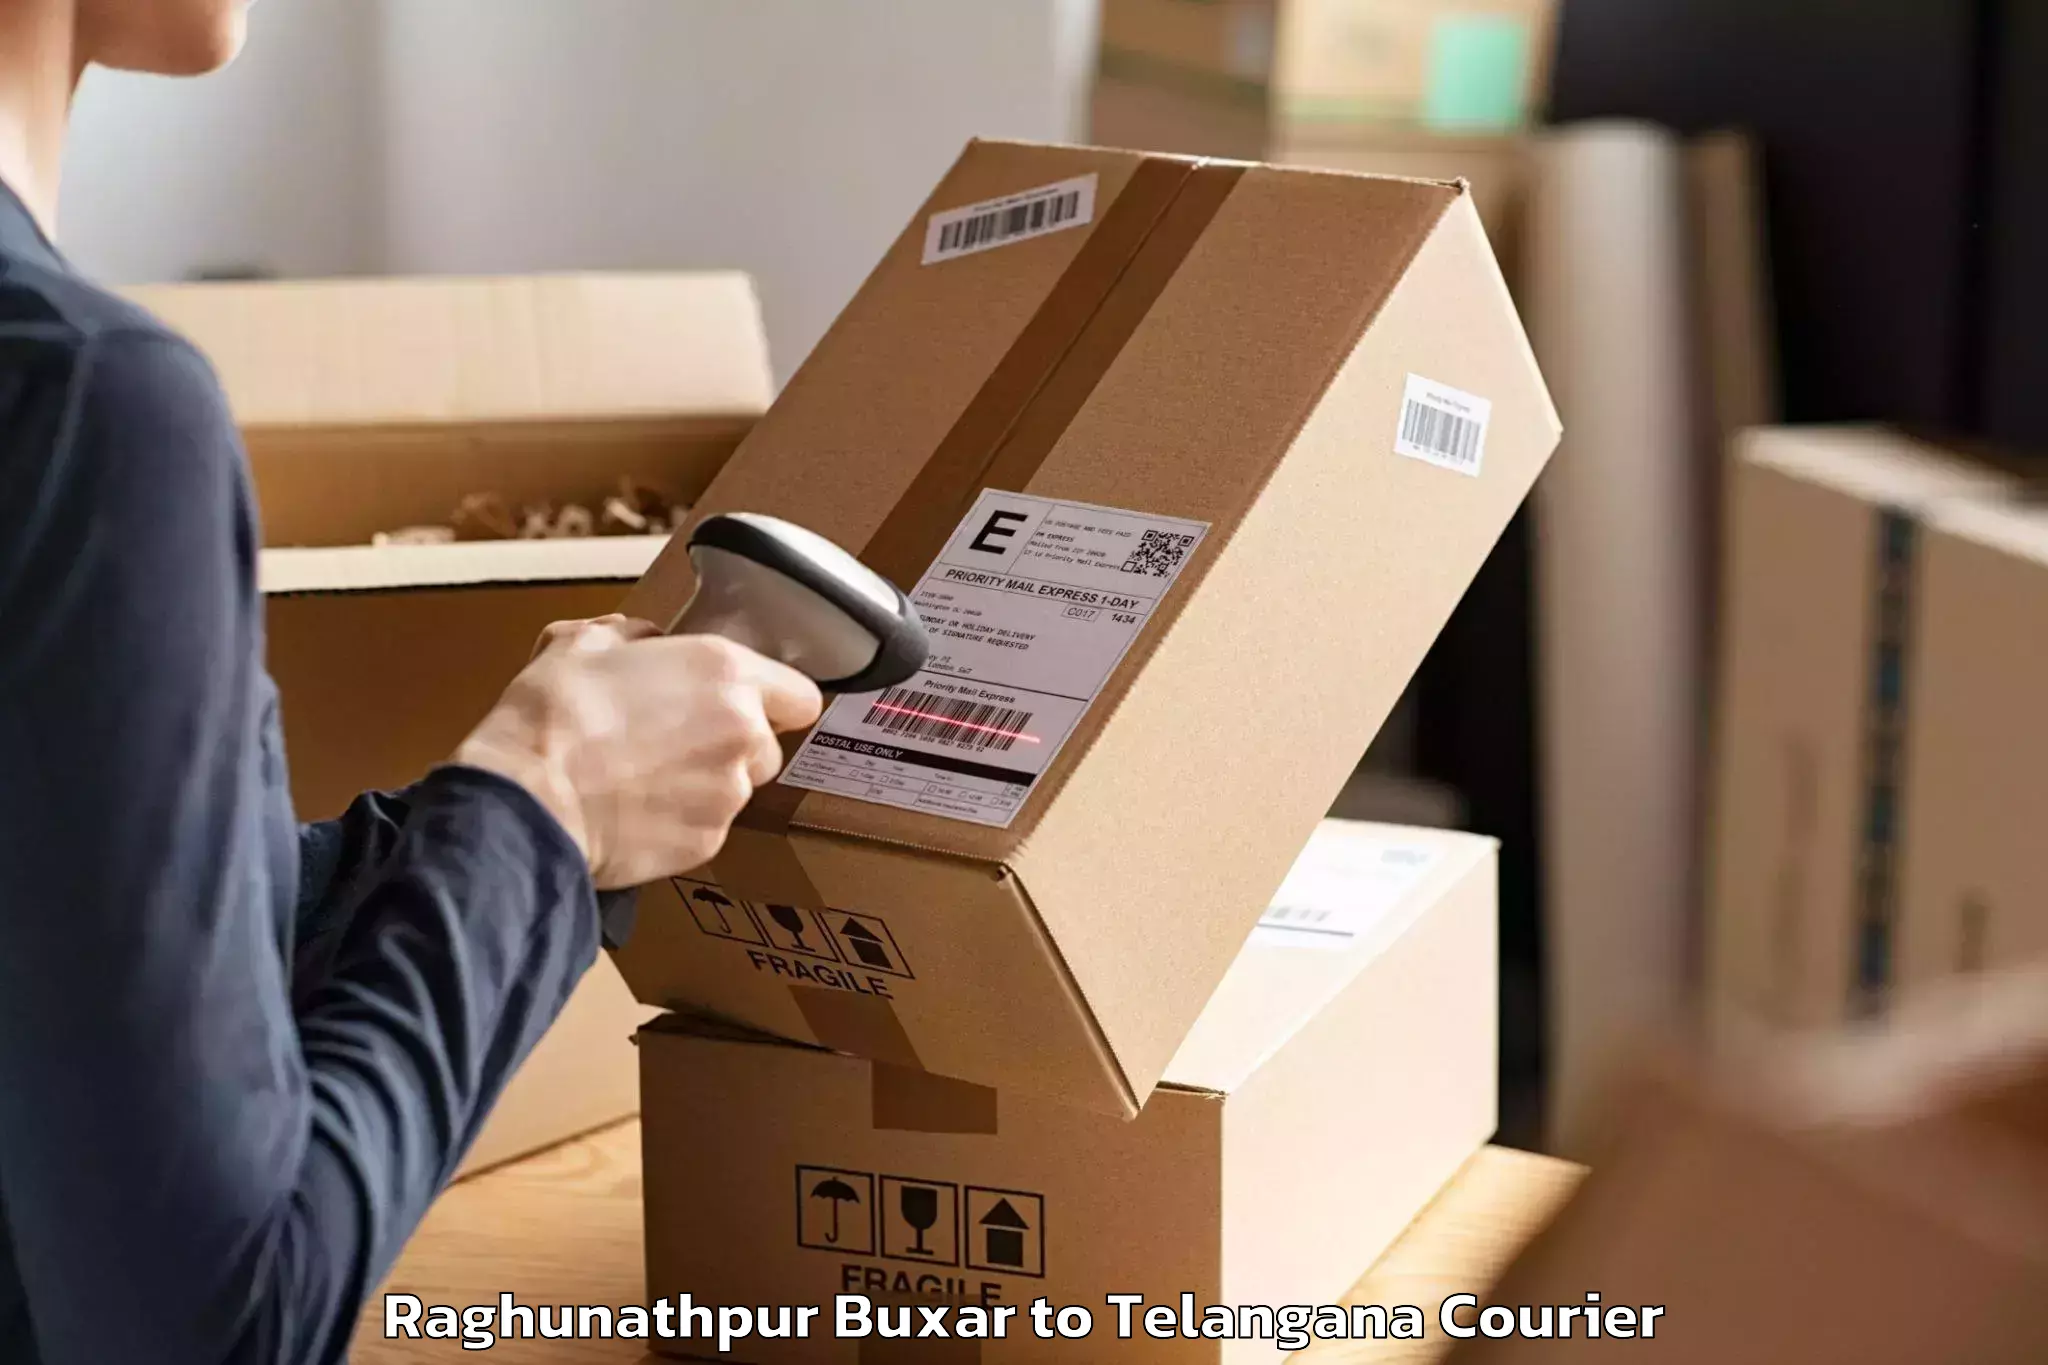 Professional moving company Raghunathpur Buxar to Huzurabad